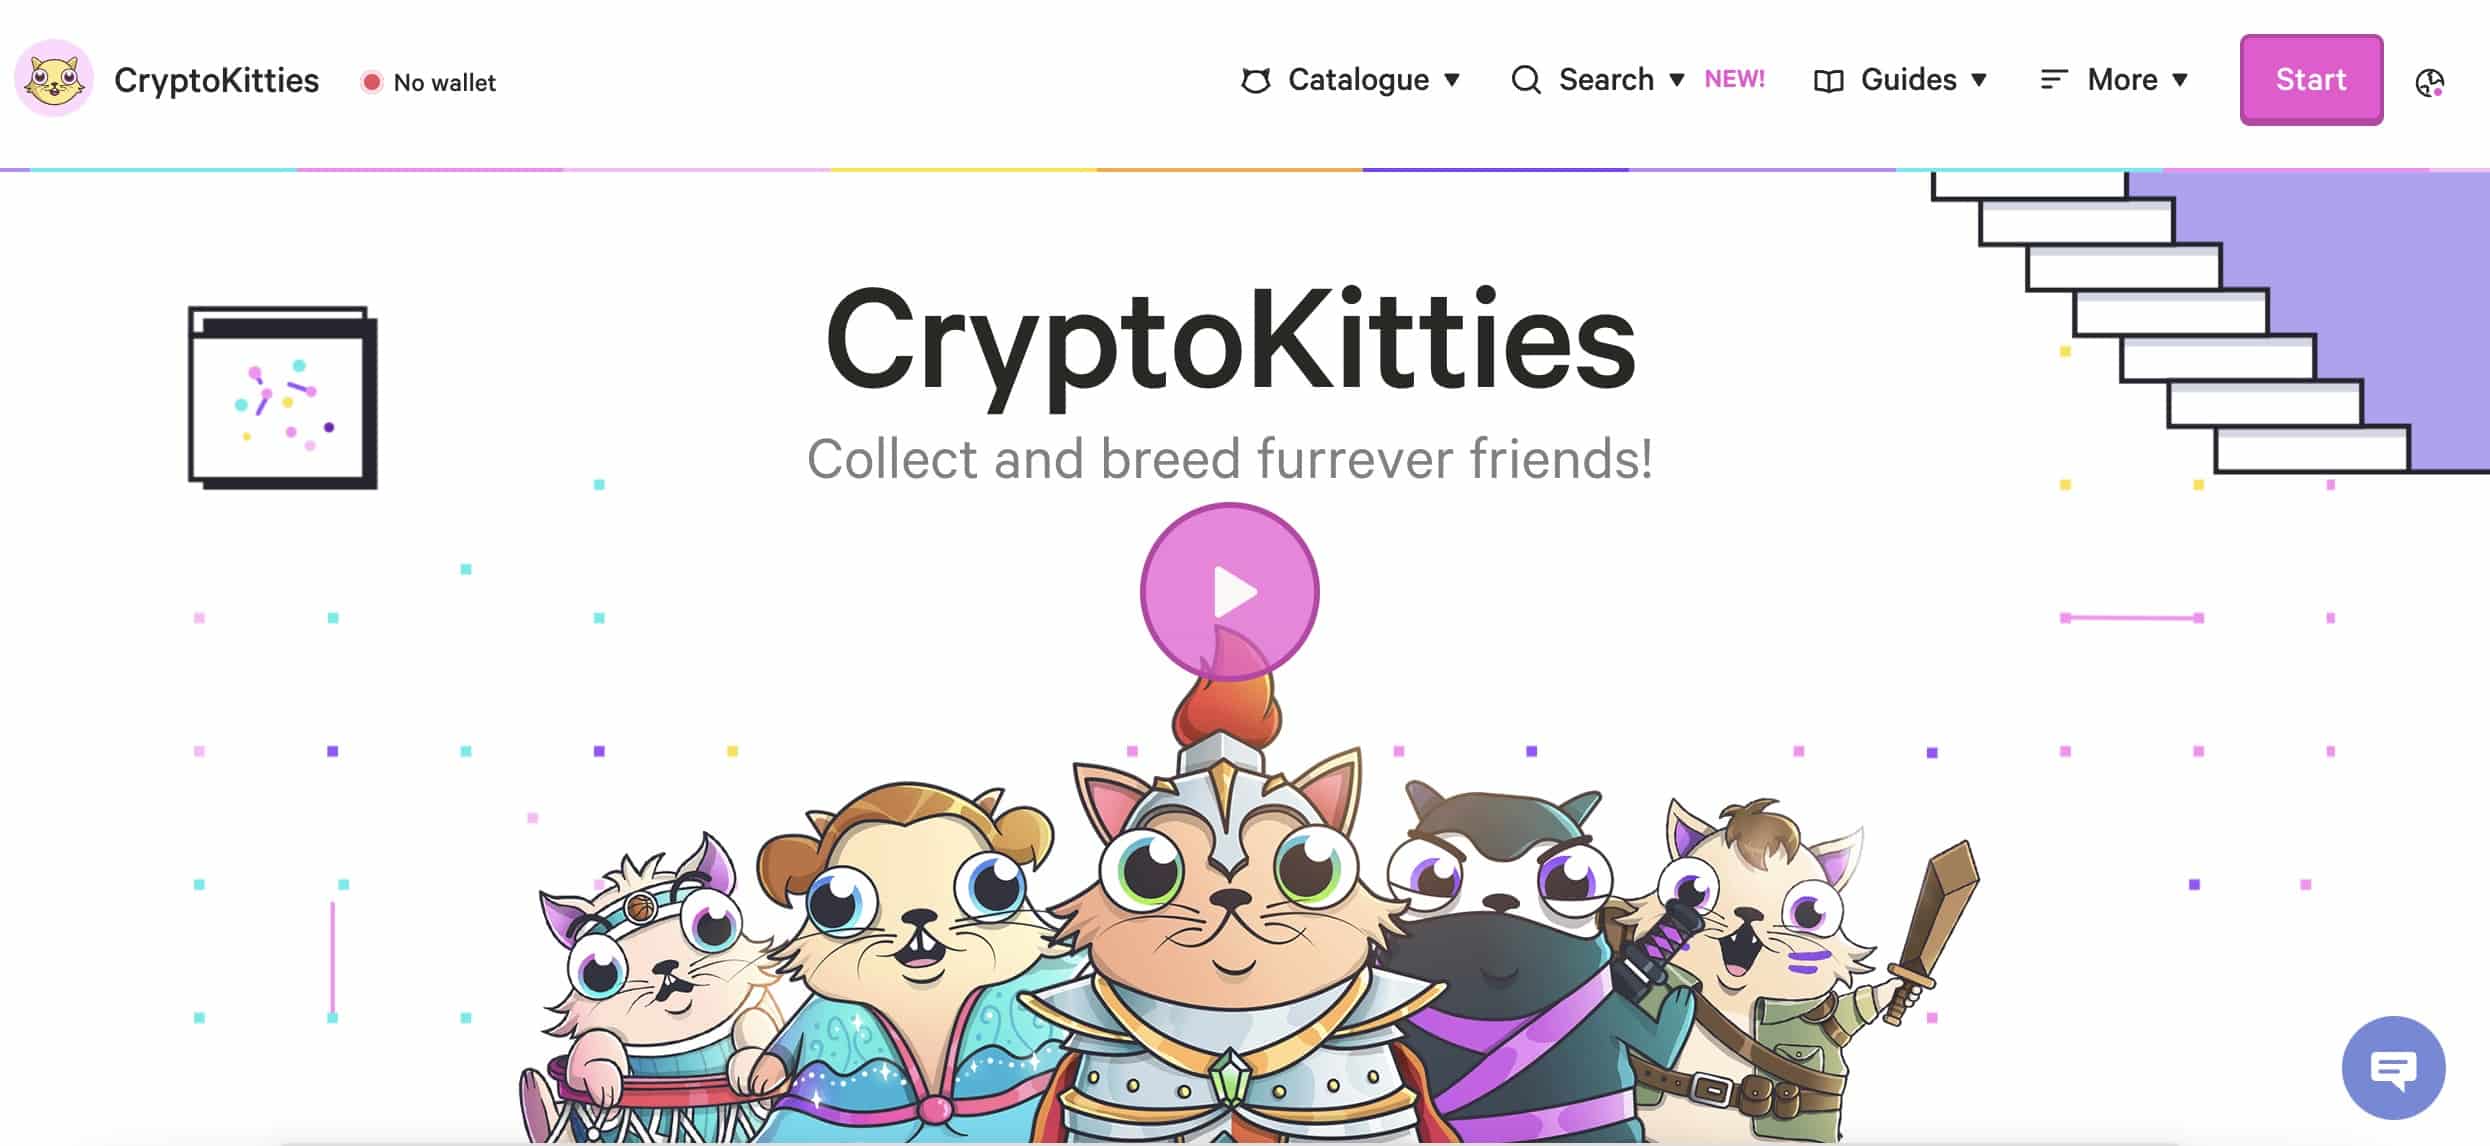 cryptokitties game review homepage